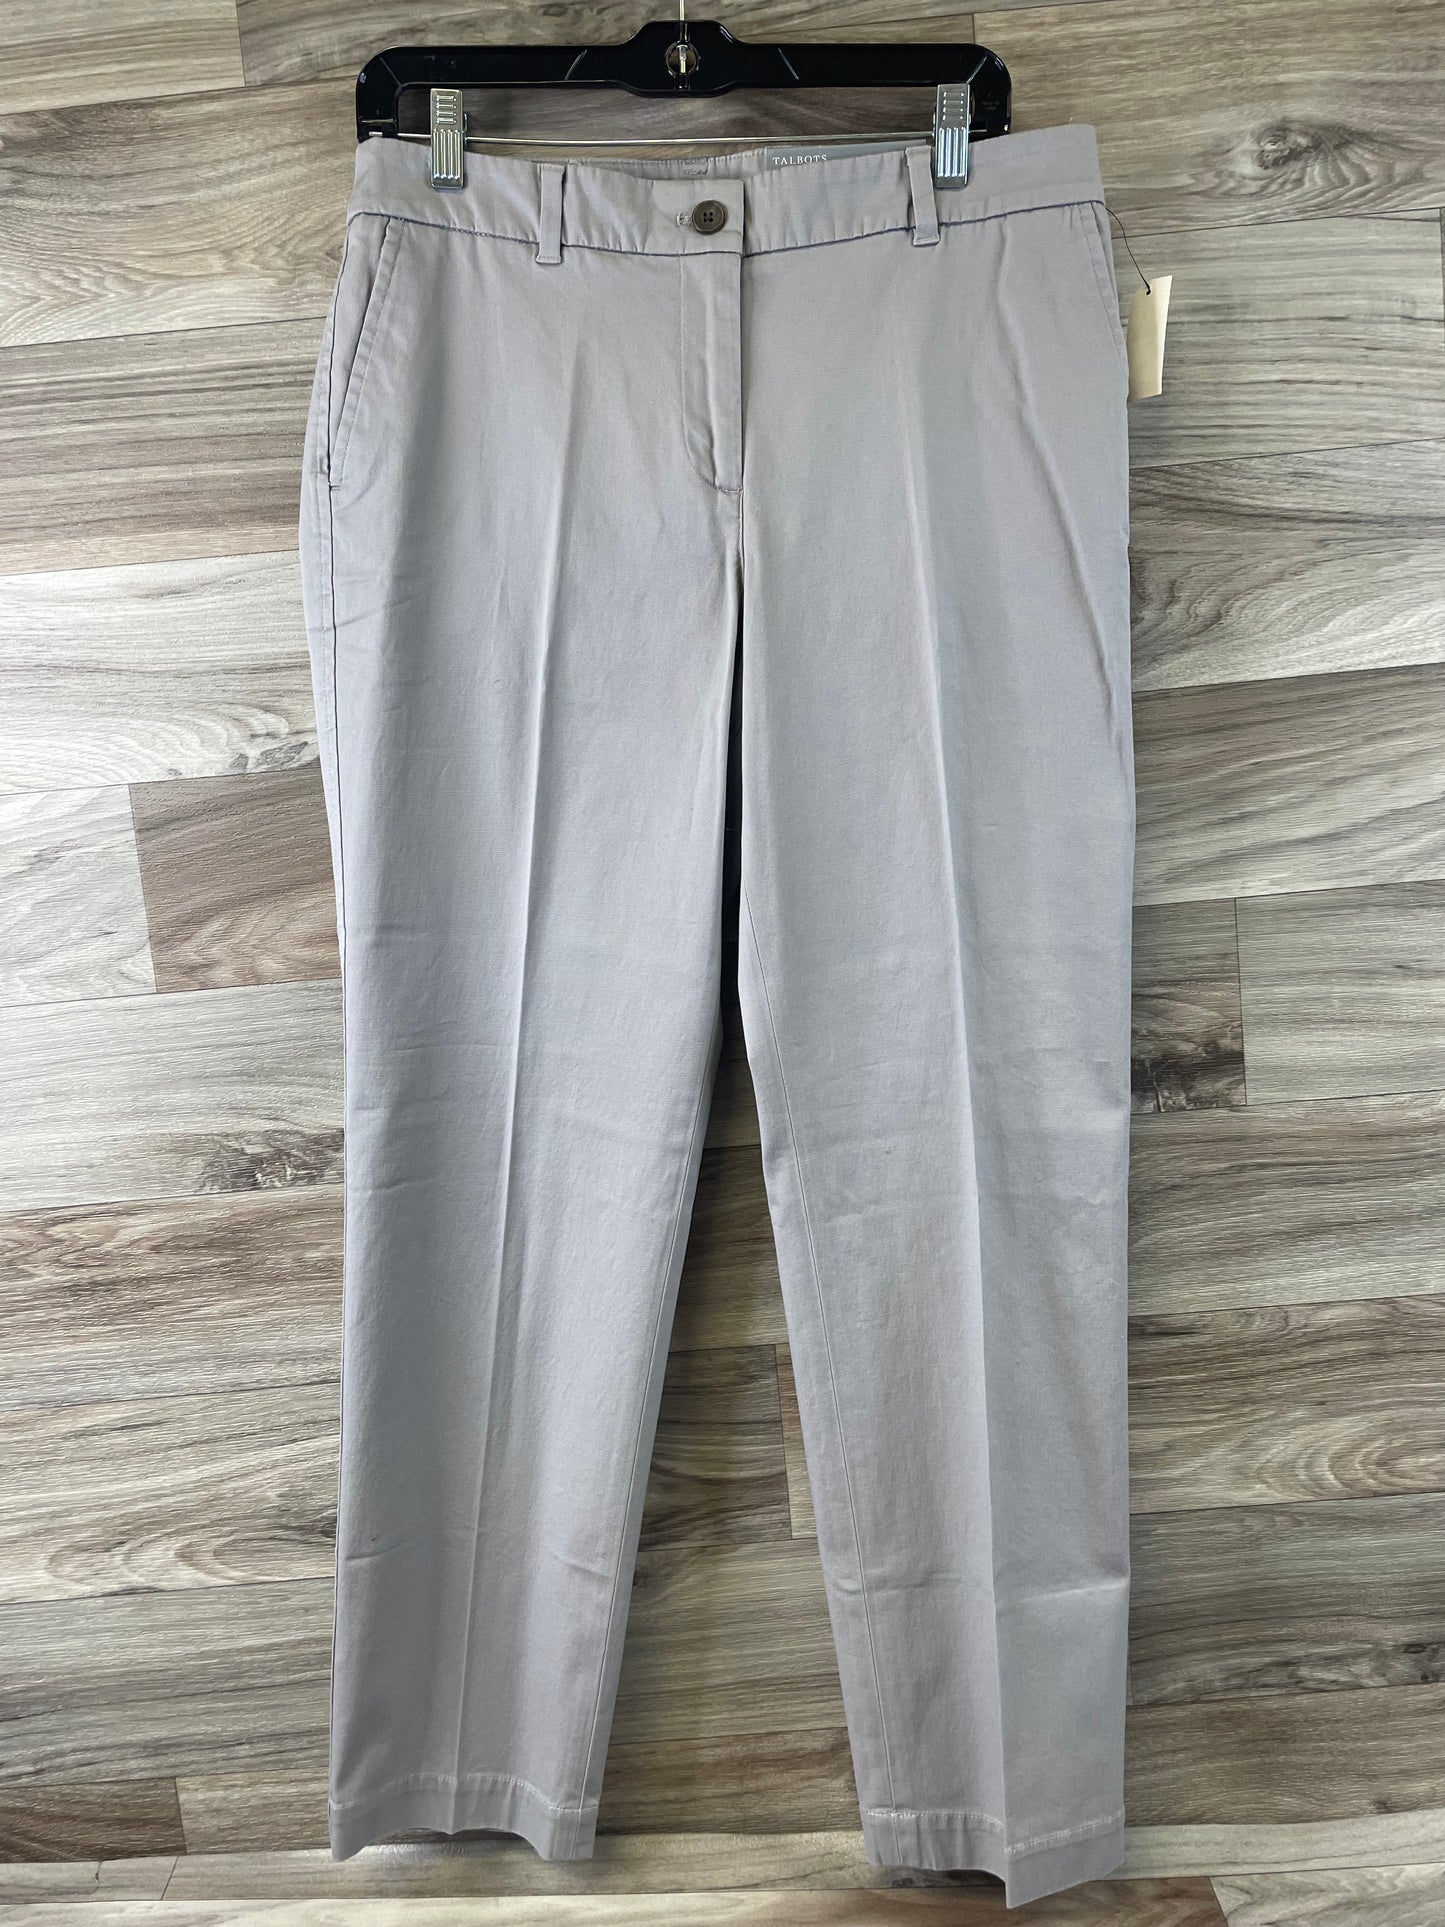 Grey Pants Chinos & Khakis Talbots, Size 8petite